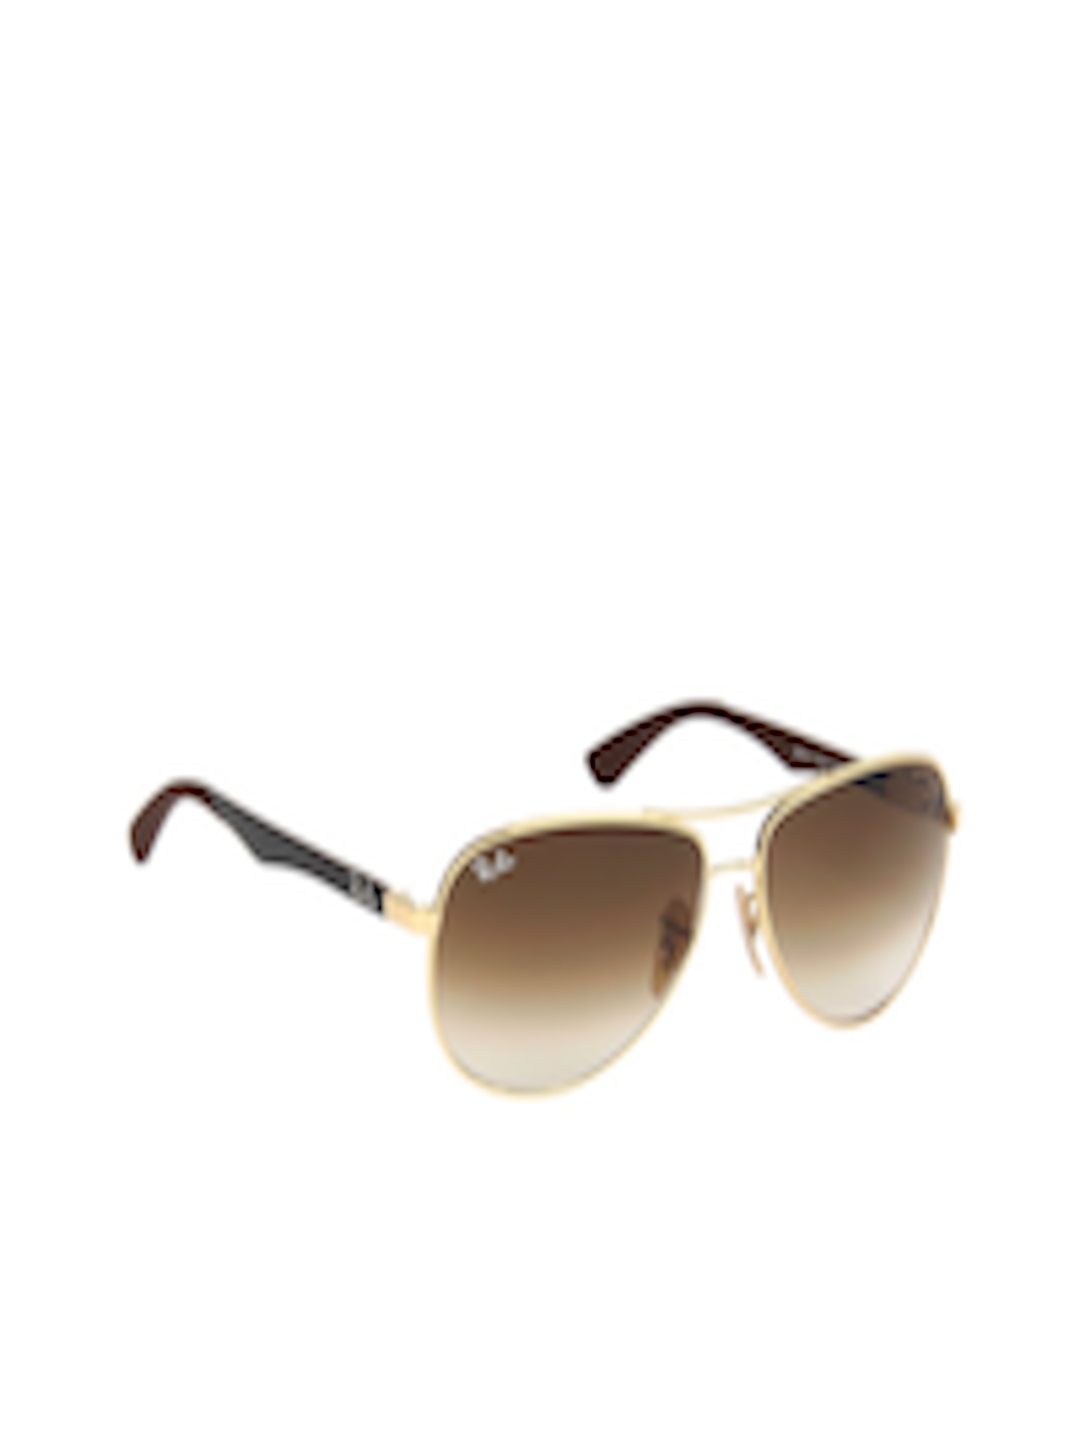 Buy Ray Ban Unisex Sunglasses - Sunglasses for Unisex 255353 | Myntra